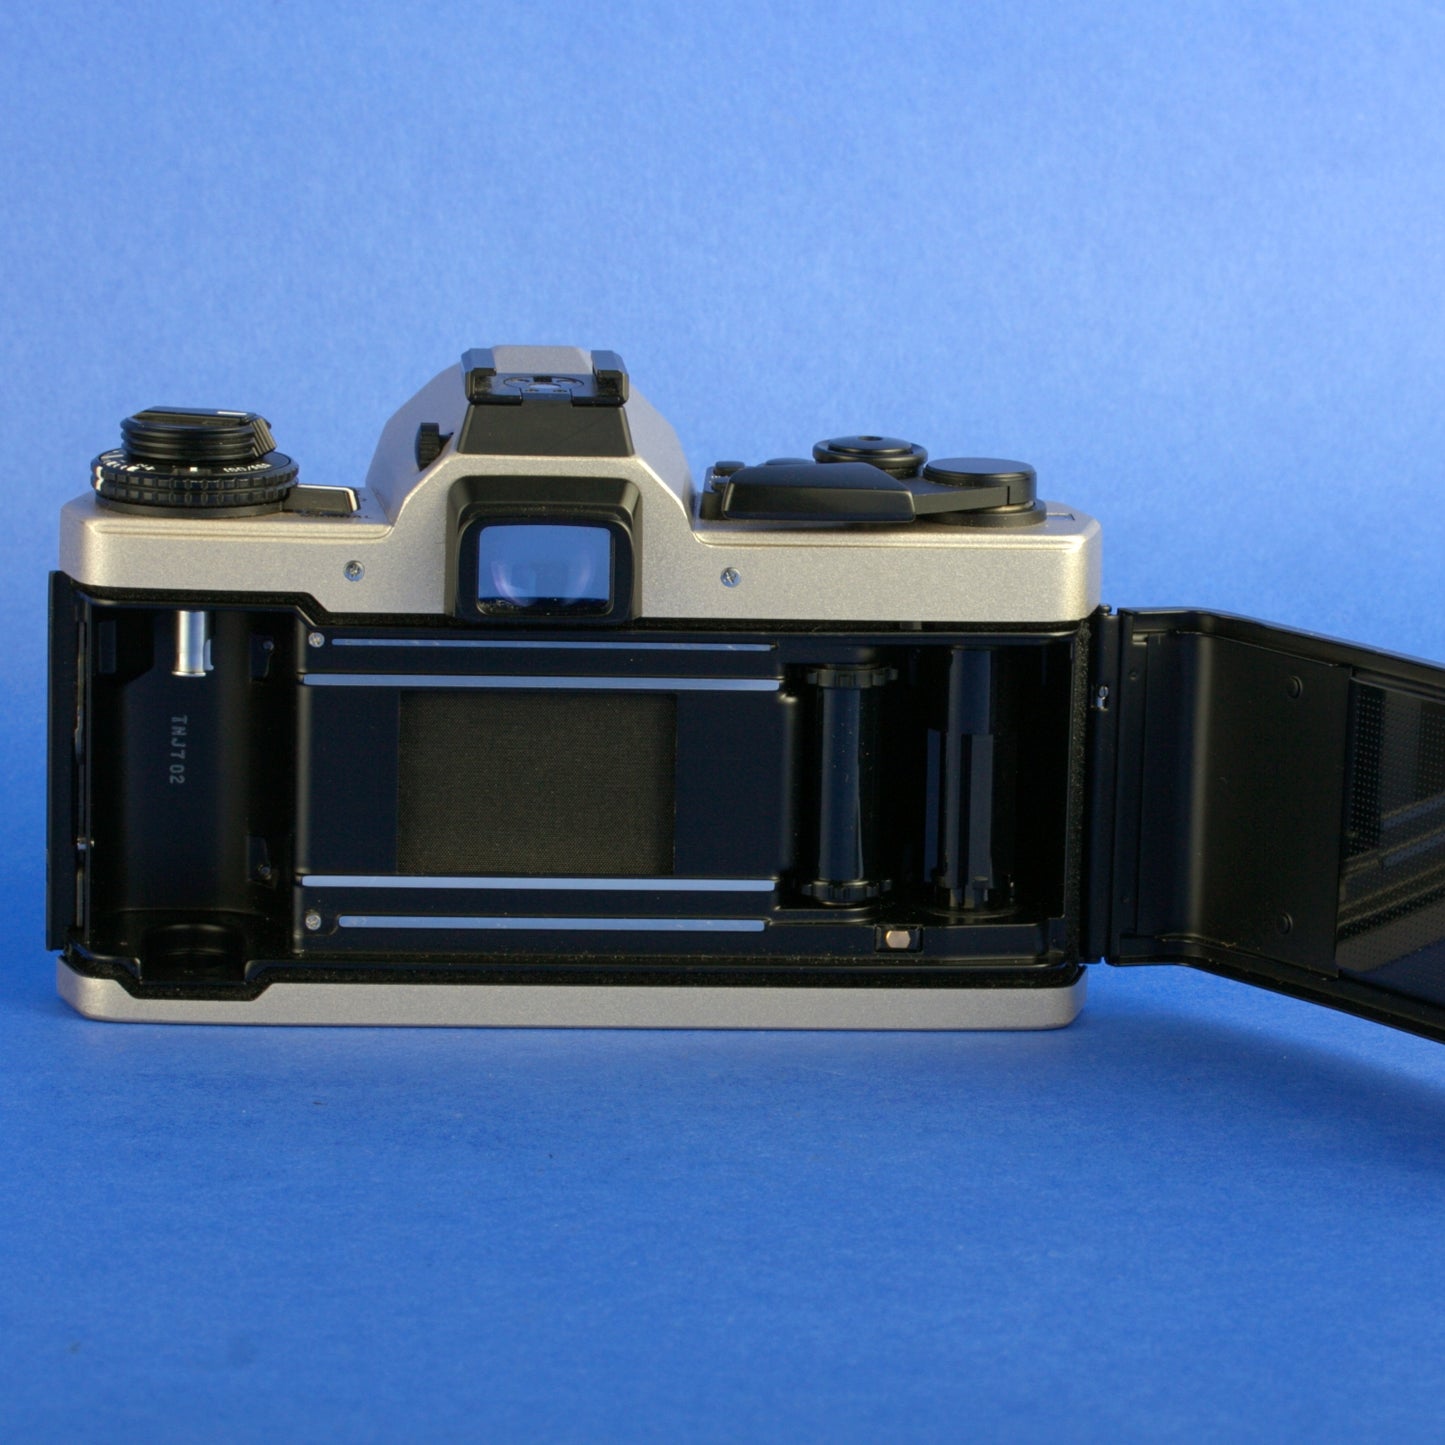 Olympus OM-4T Film Camera Body Beautiful Condition